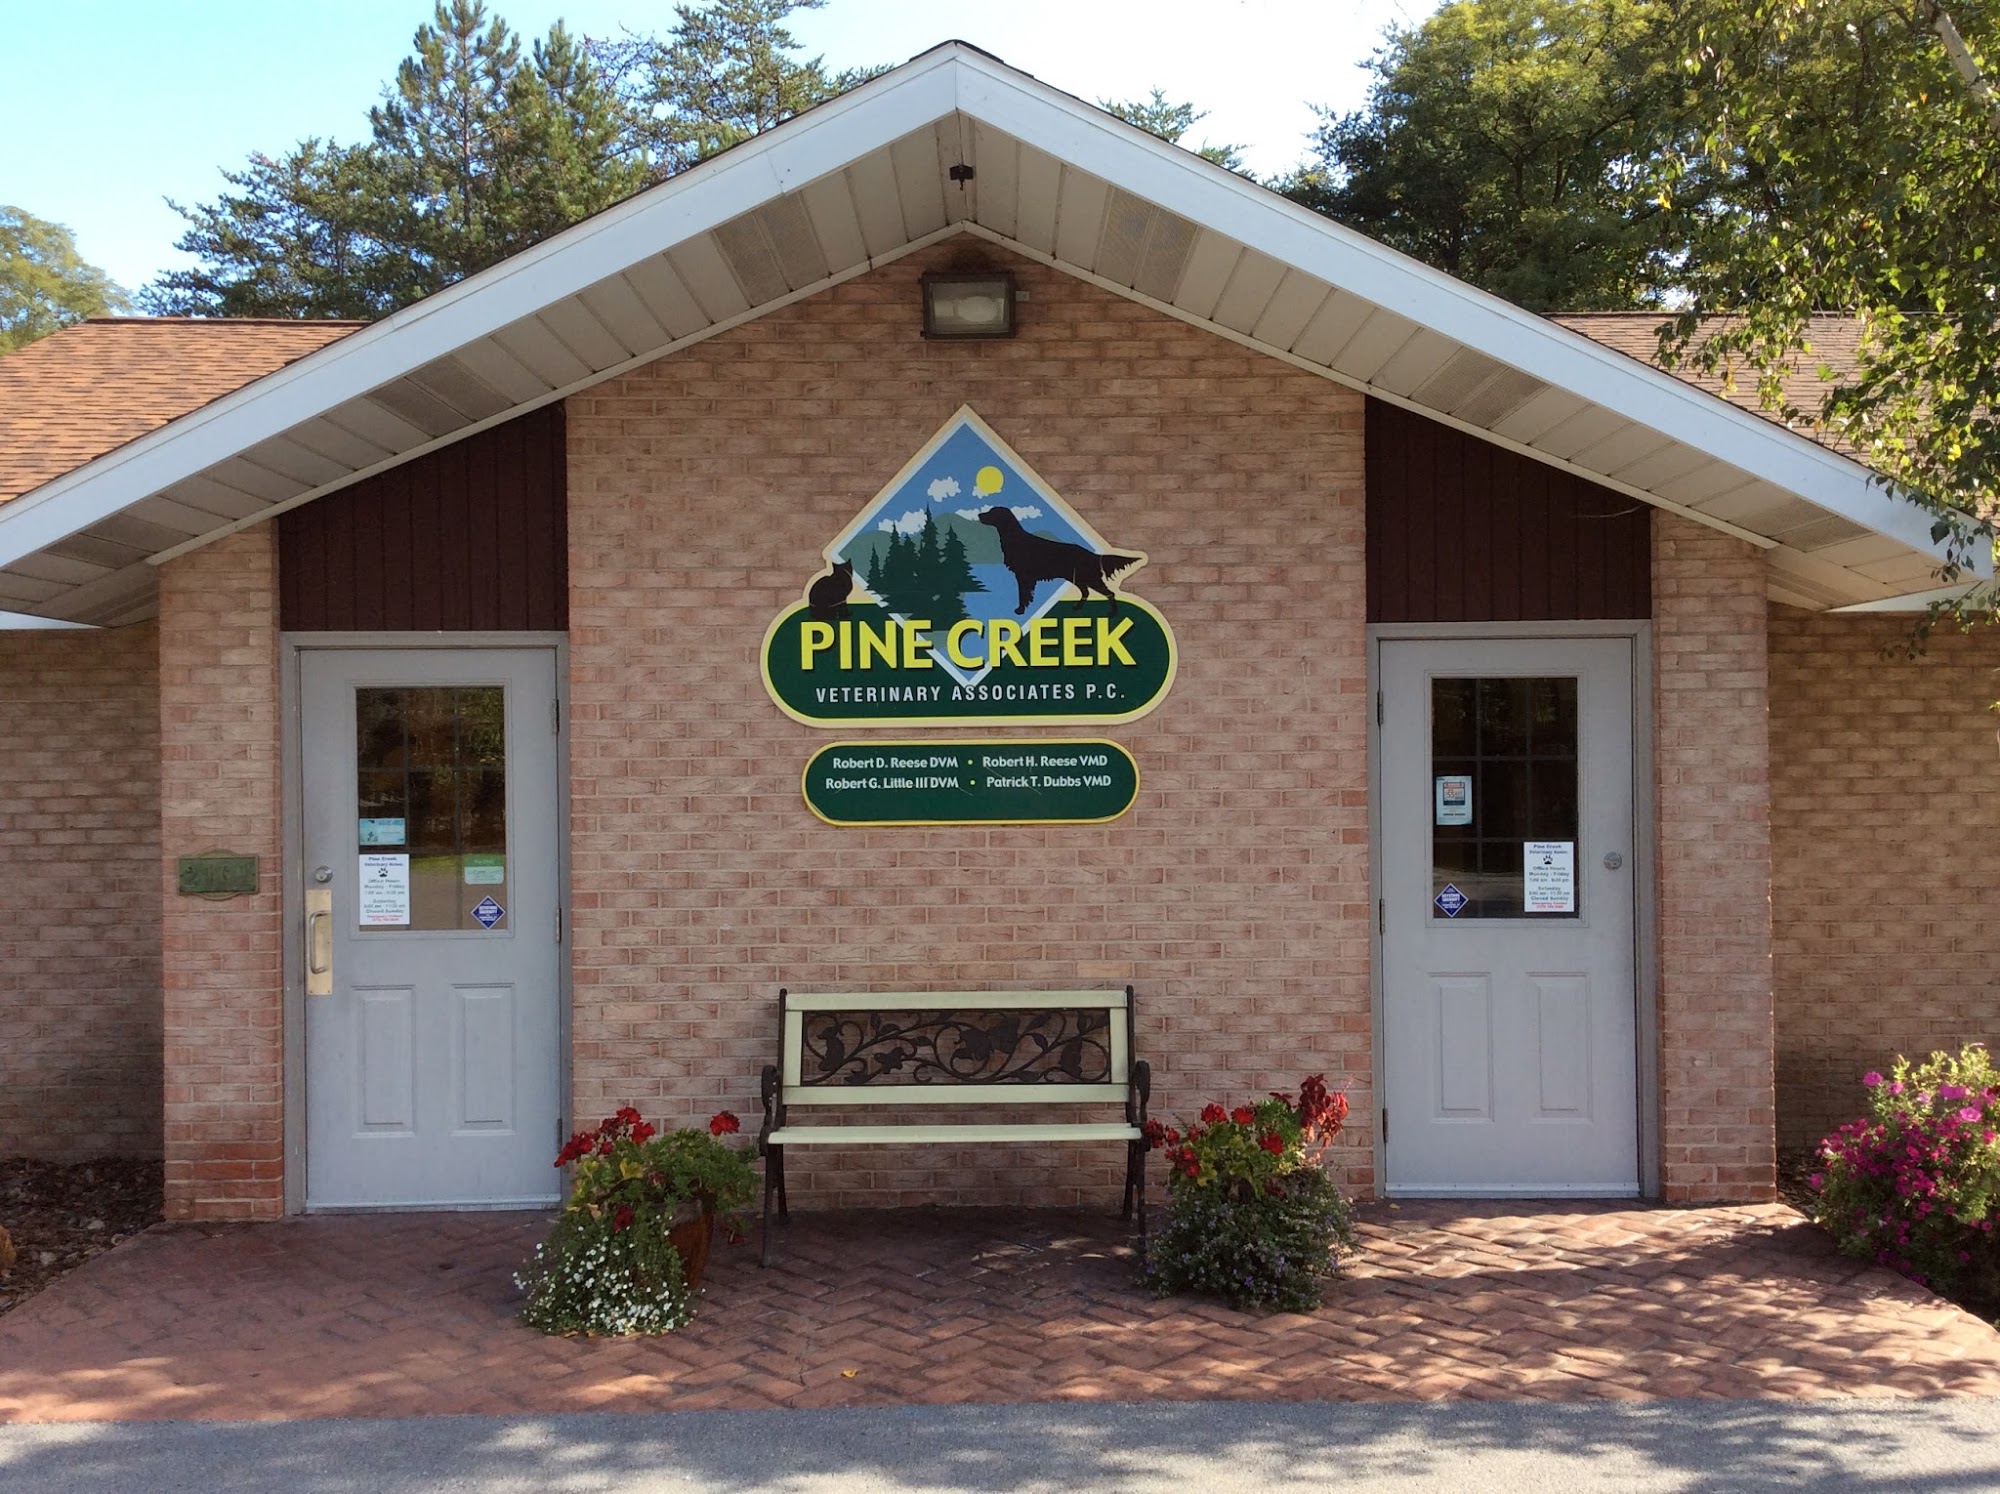 Pine Creek Veterinary Associates